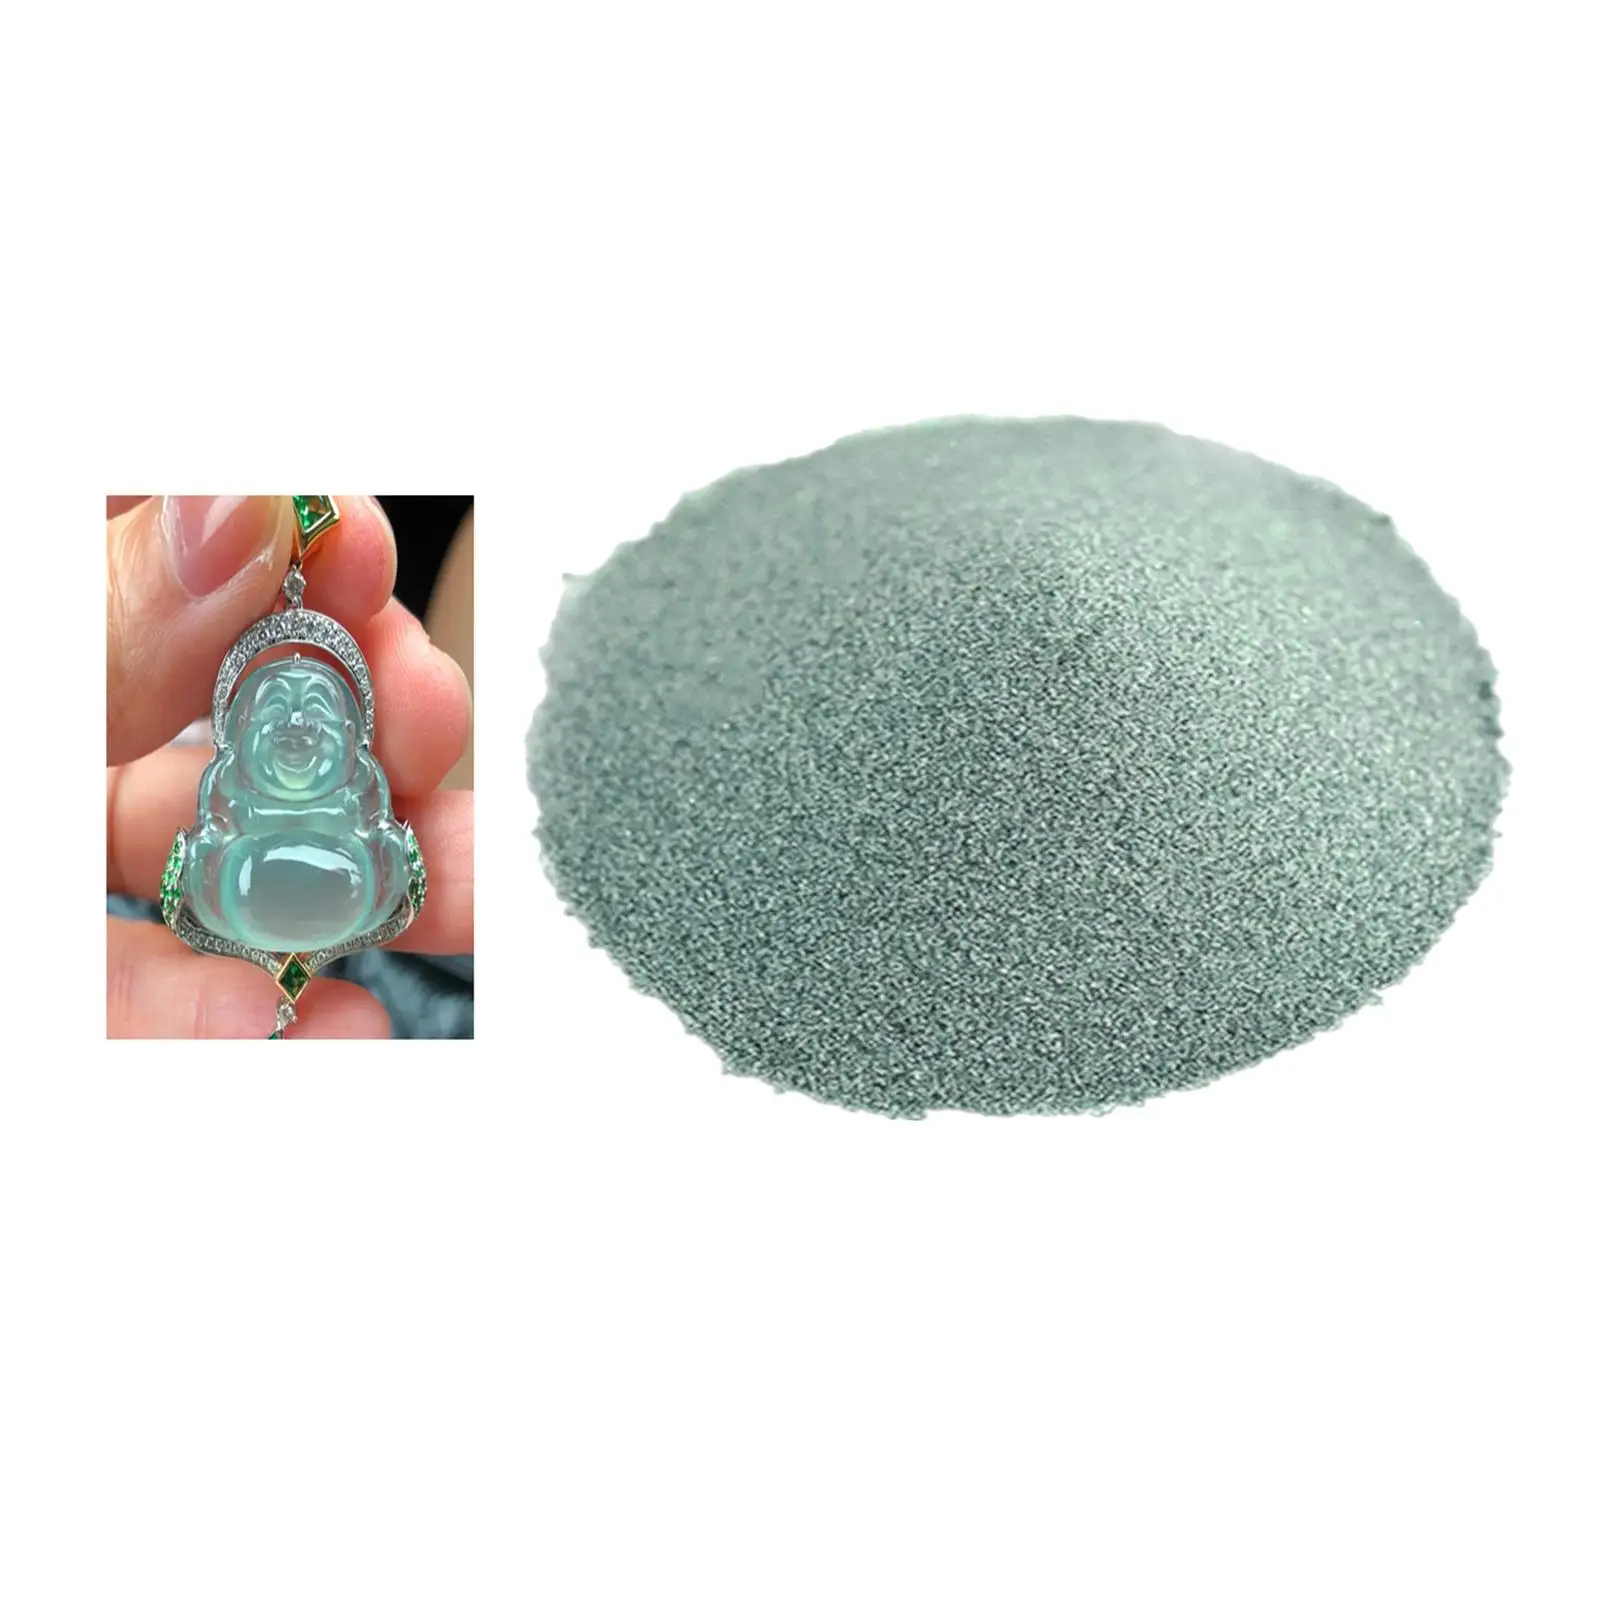 Green Silicon Carbide Powder Polisher 180 Grit Polishing Powder for Vibrating Tumbler Crystal Mixed Stone Lapidary Grinding